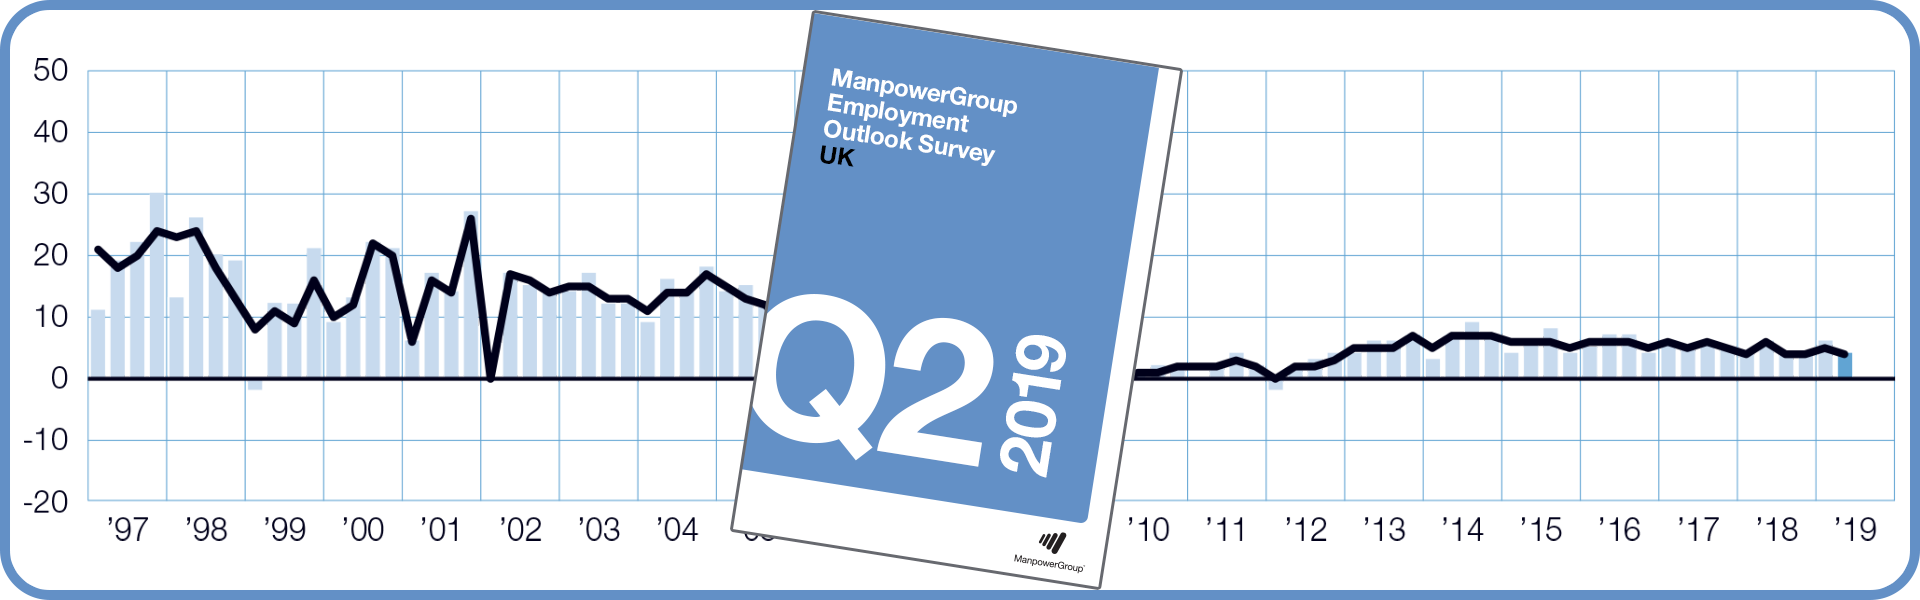 ManpowerGroup Employment Outlook Survey - Q2 2019